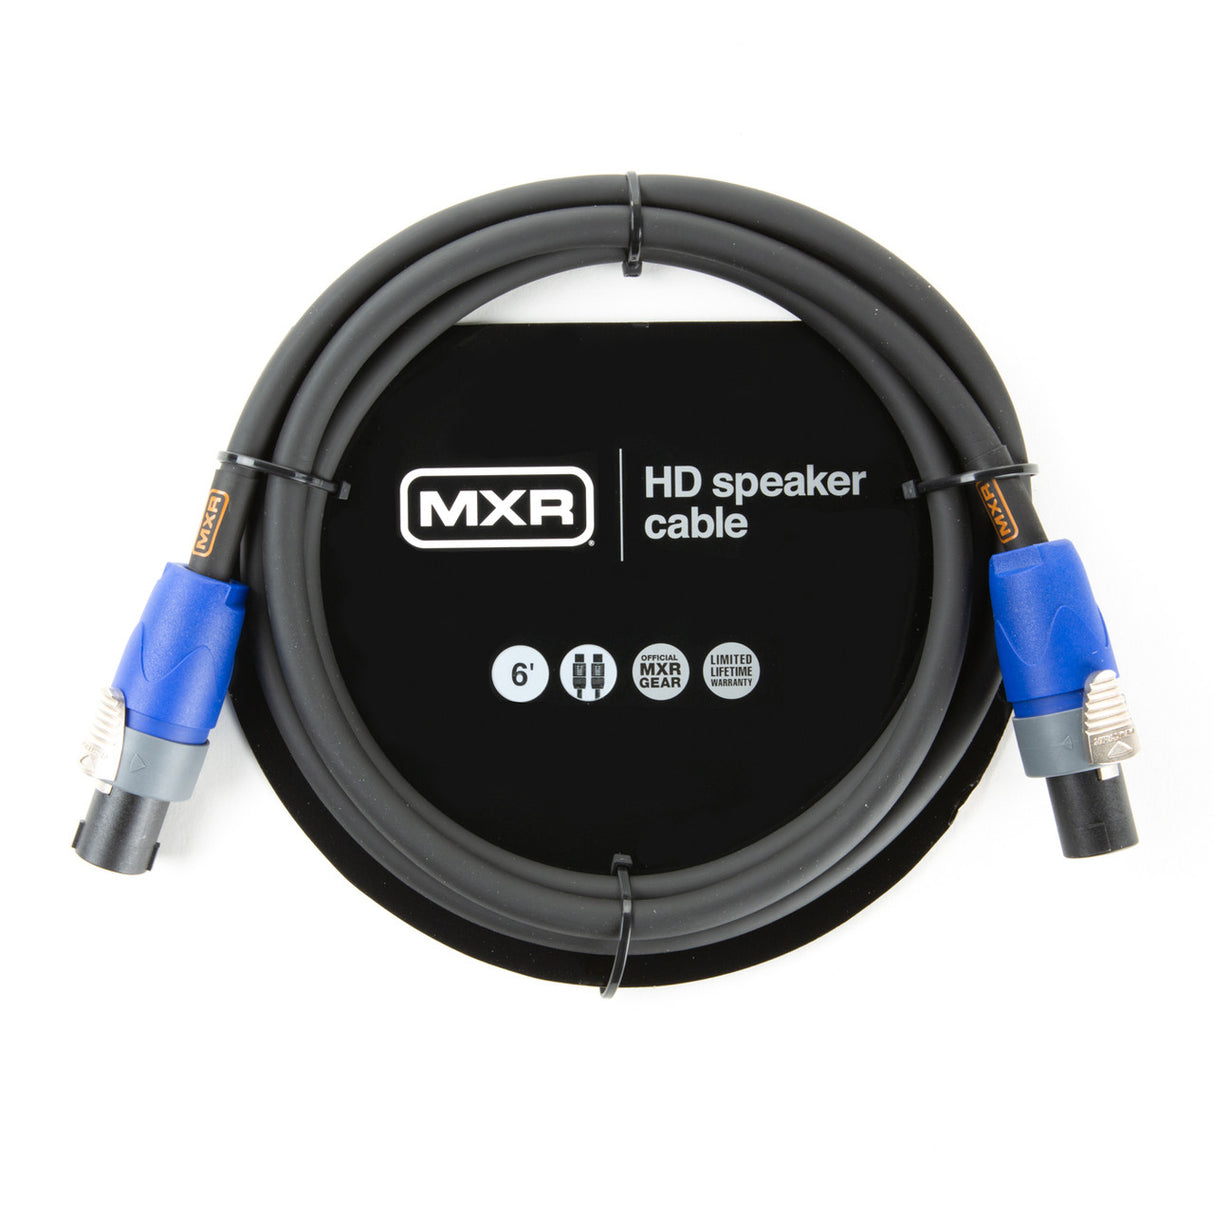 MXR 6' HD Speakon Speaker Cable